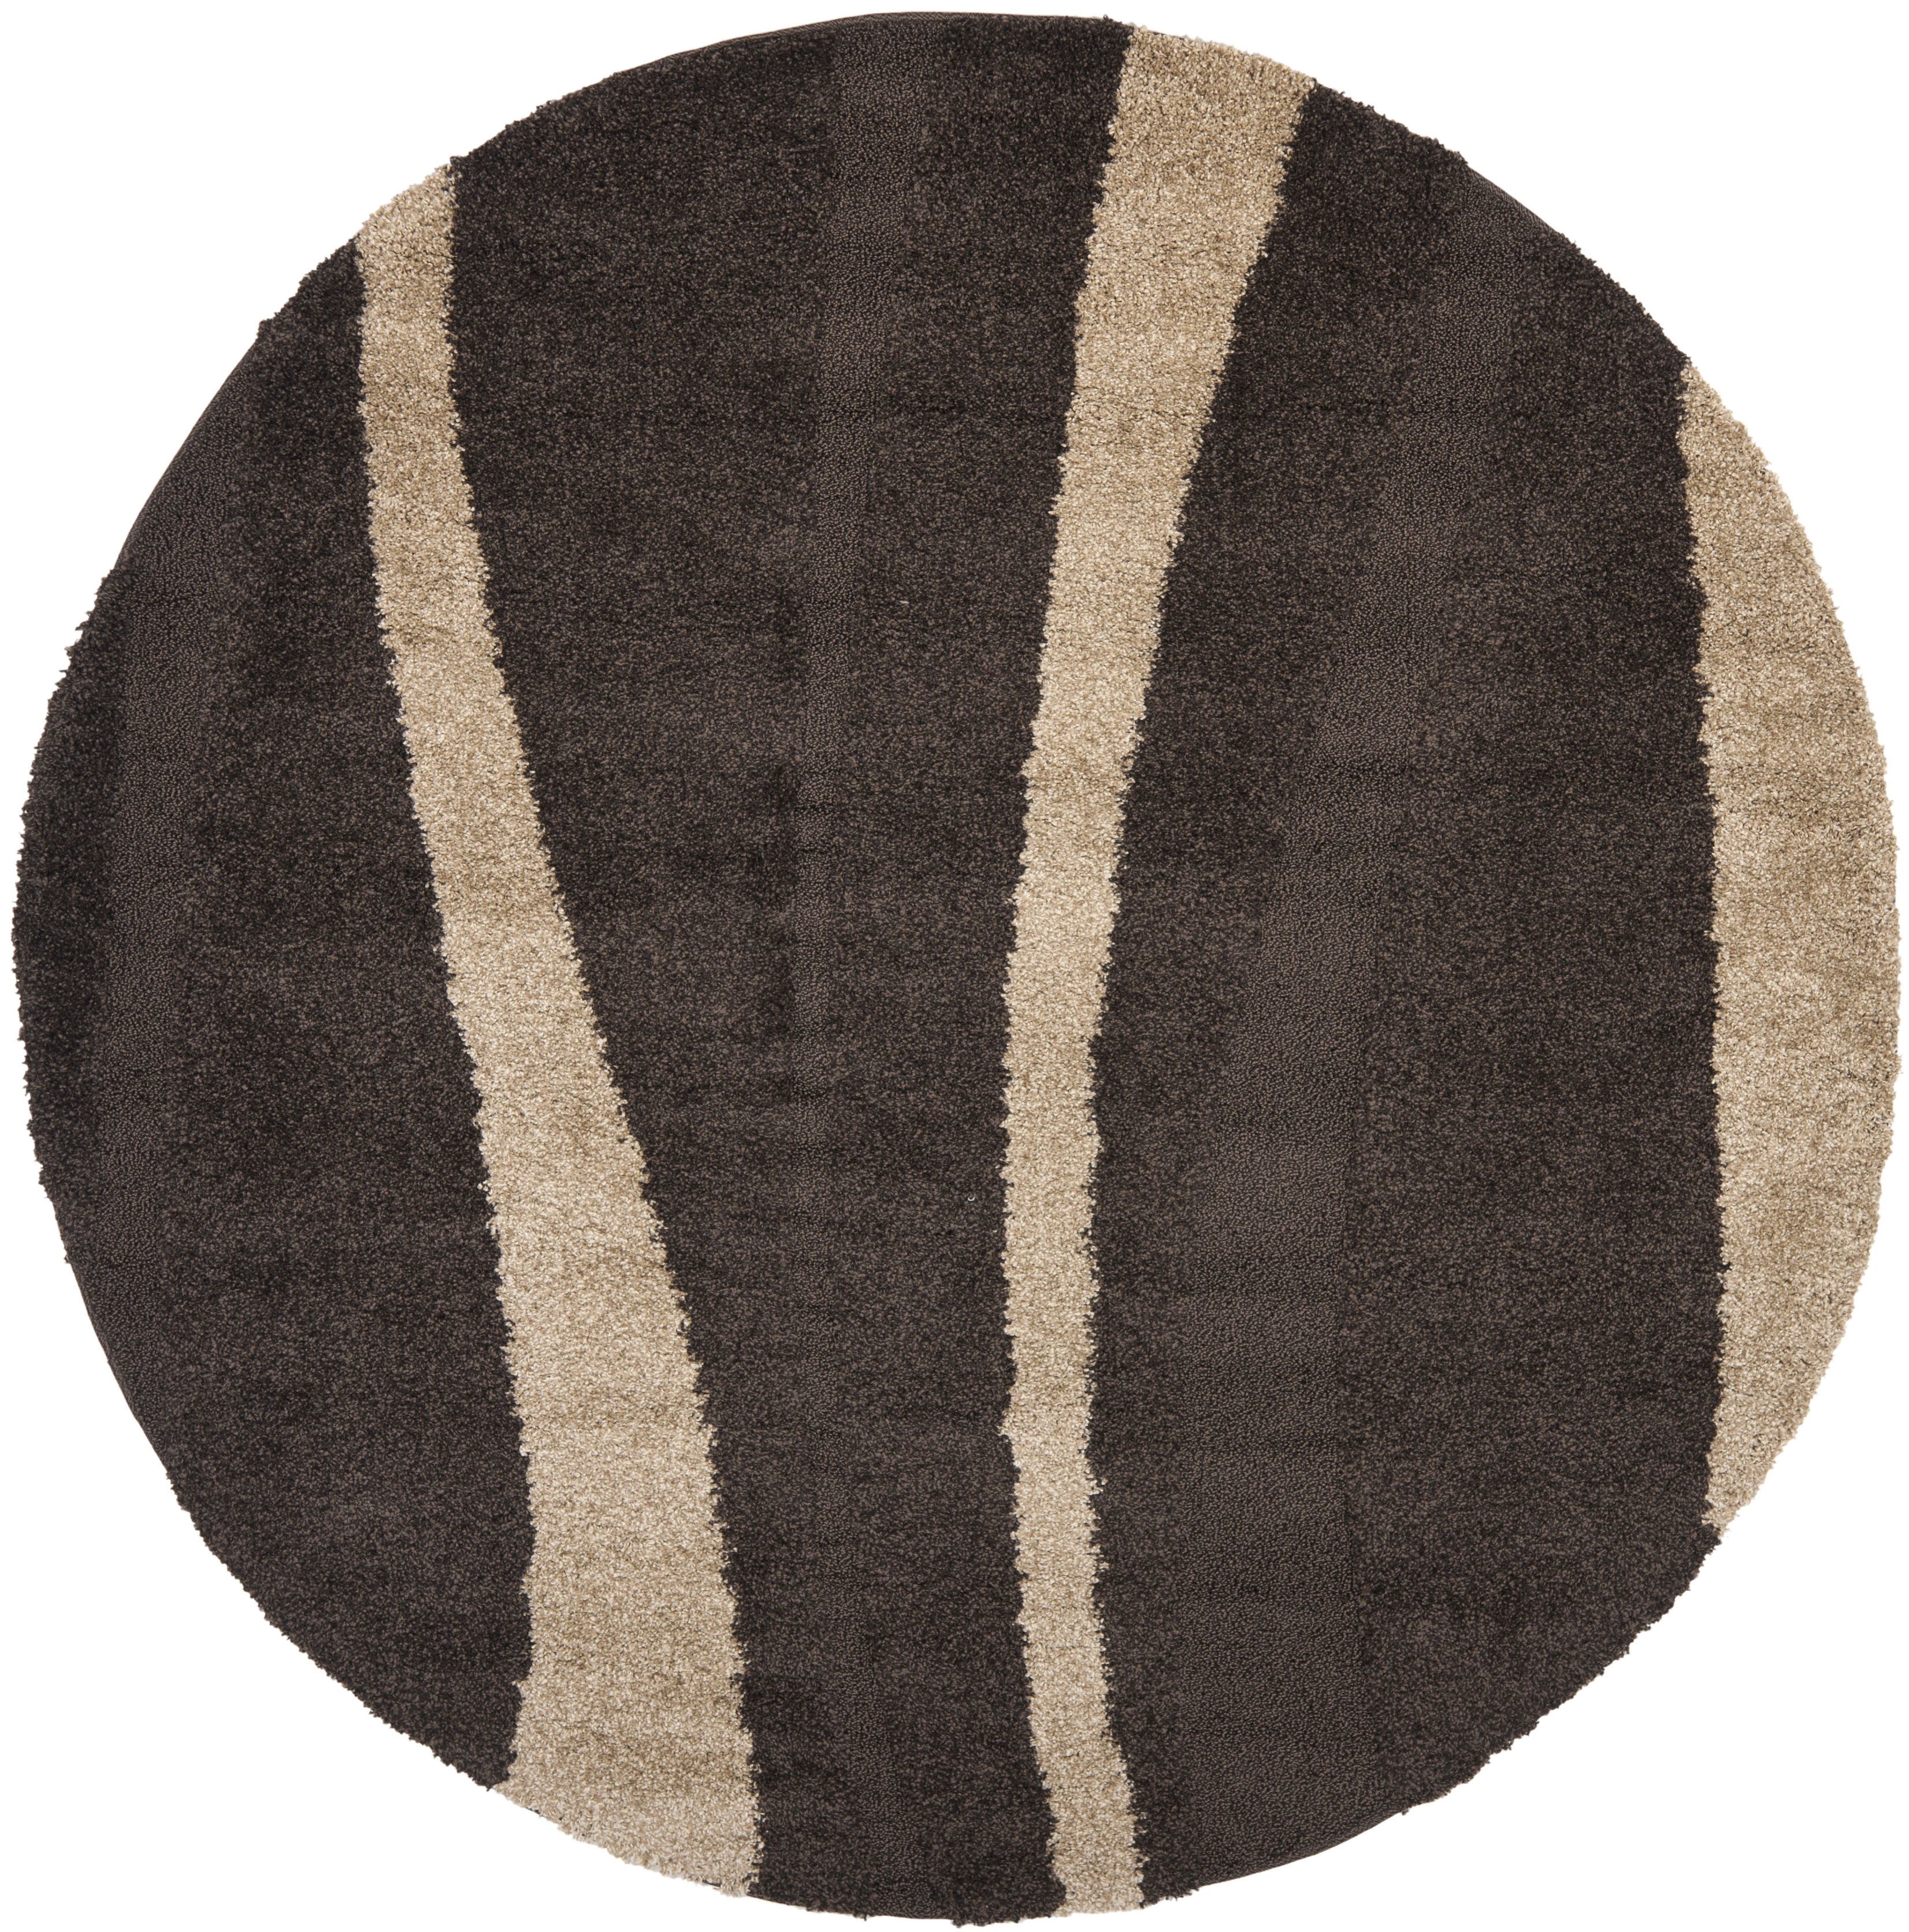 Arlo Home Woven Area Rug, SG451-2813, Dark Brown/Beige,  6' 7" X 6' 7" Round - Image 0